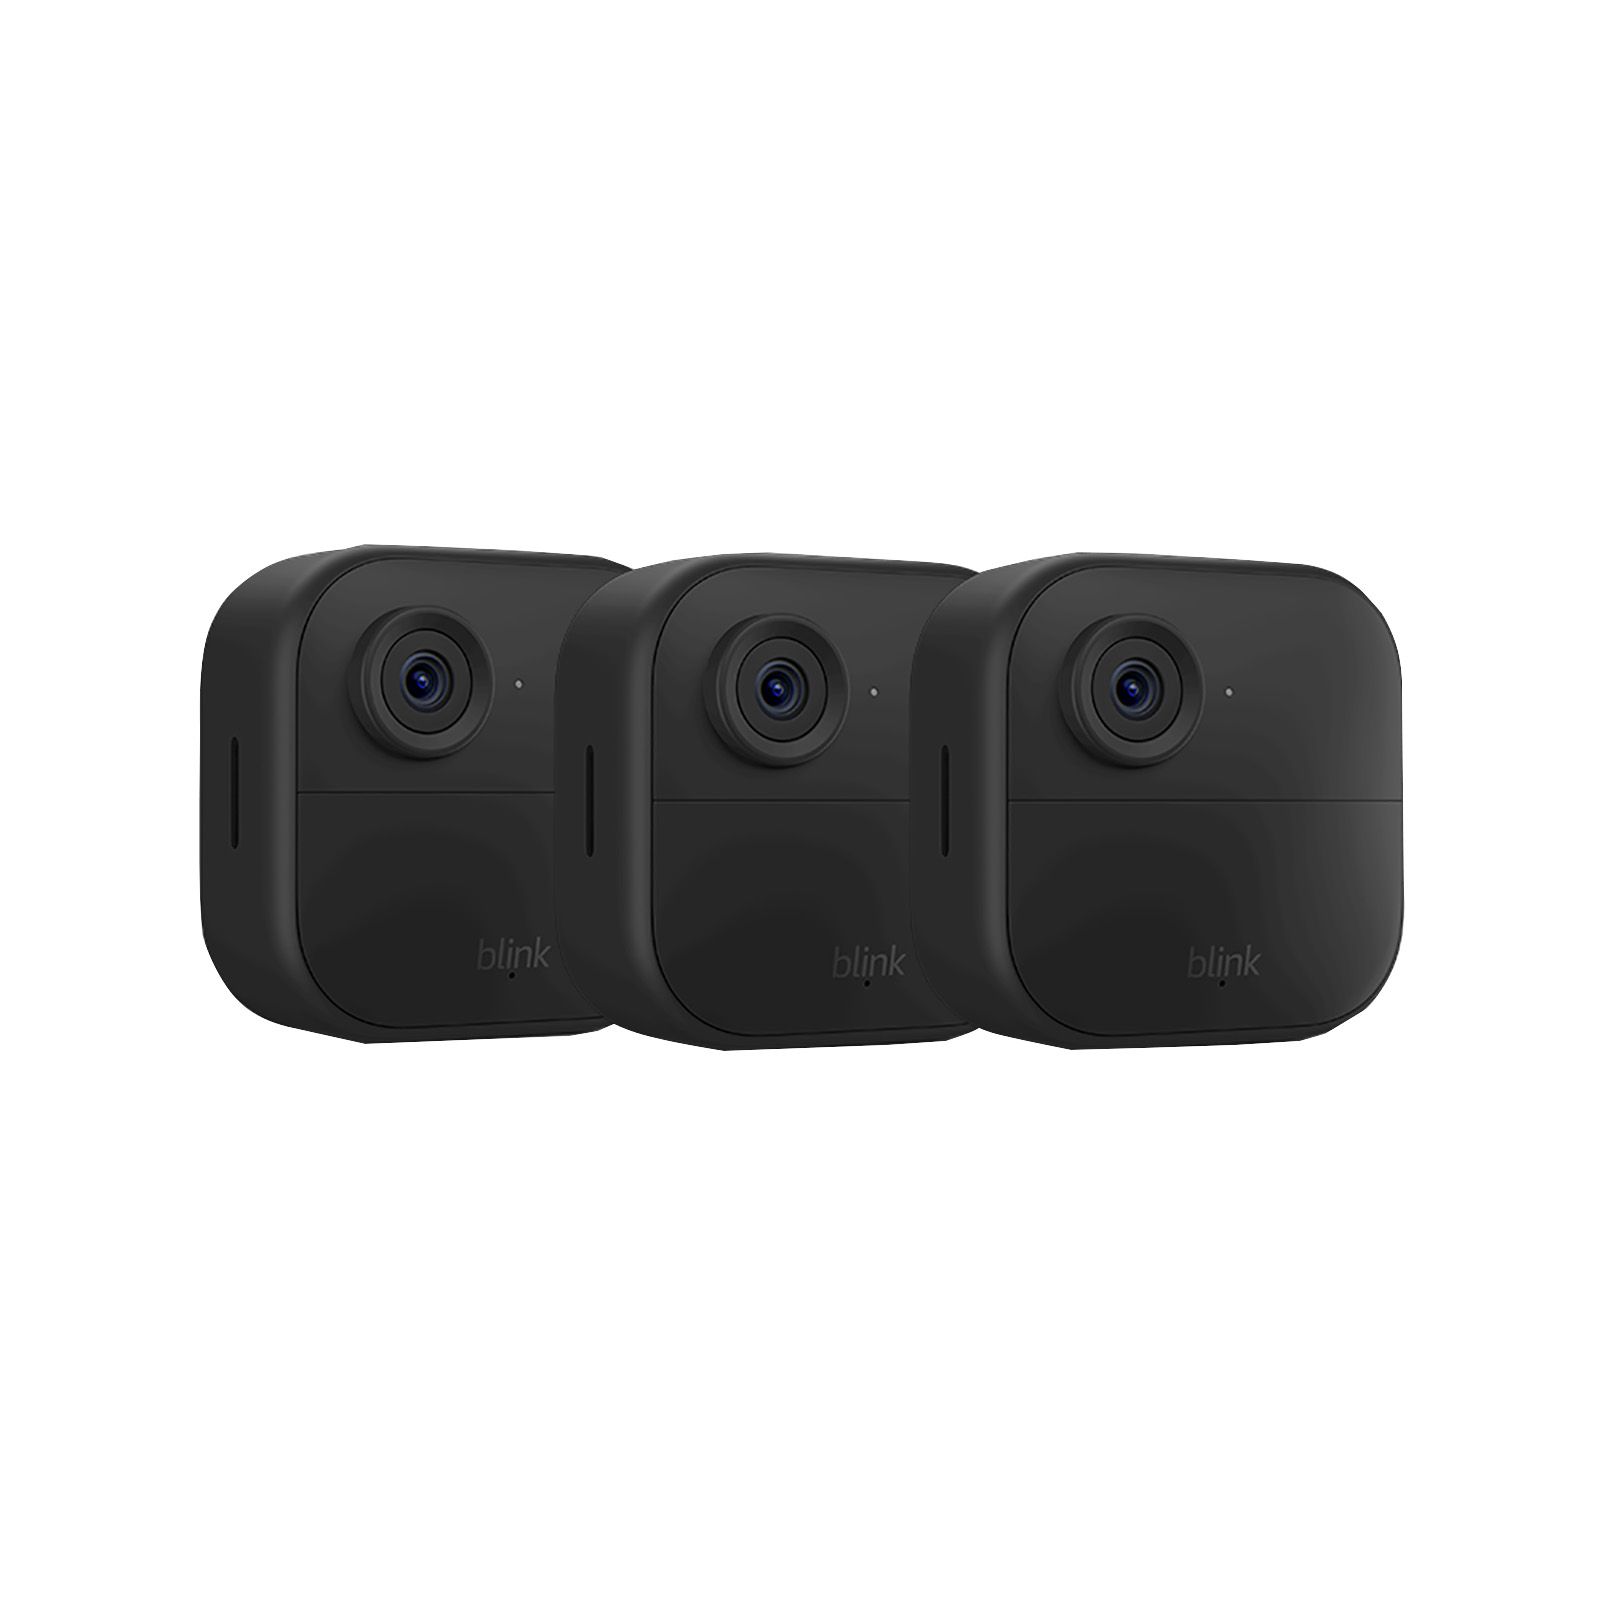 Shop Blink Outdoor Camera 4-Pack (4th Gen) Smart Security Camera System at